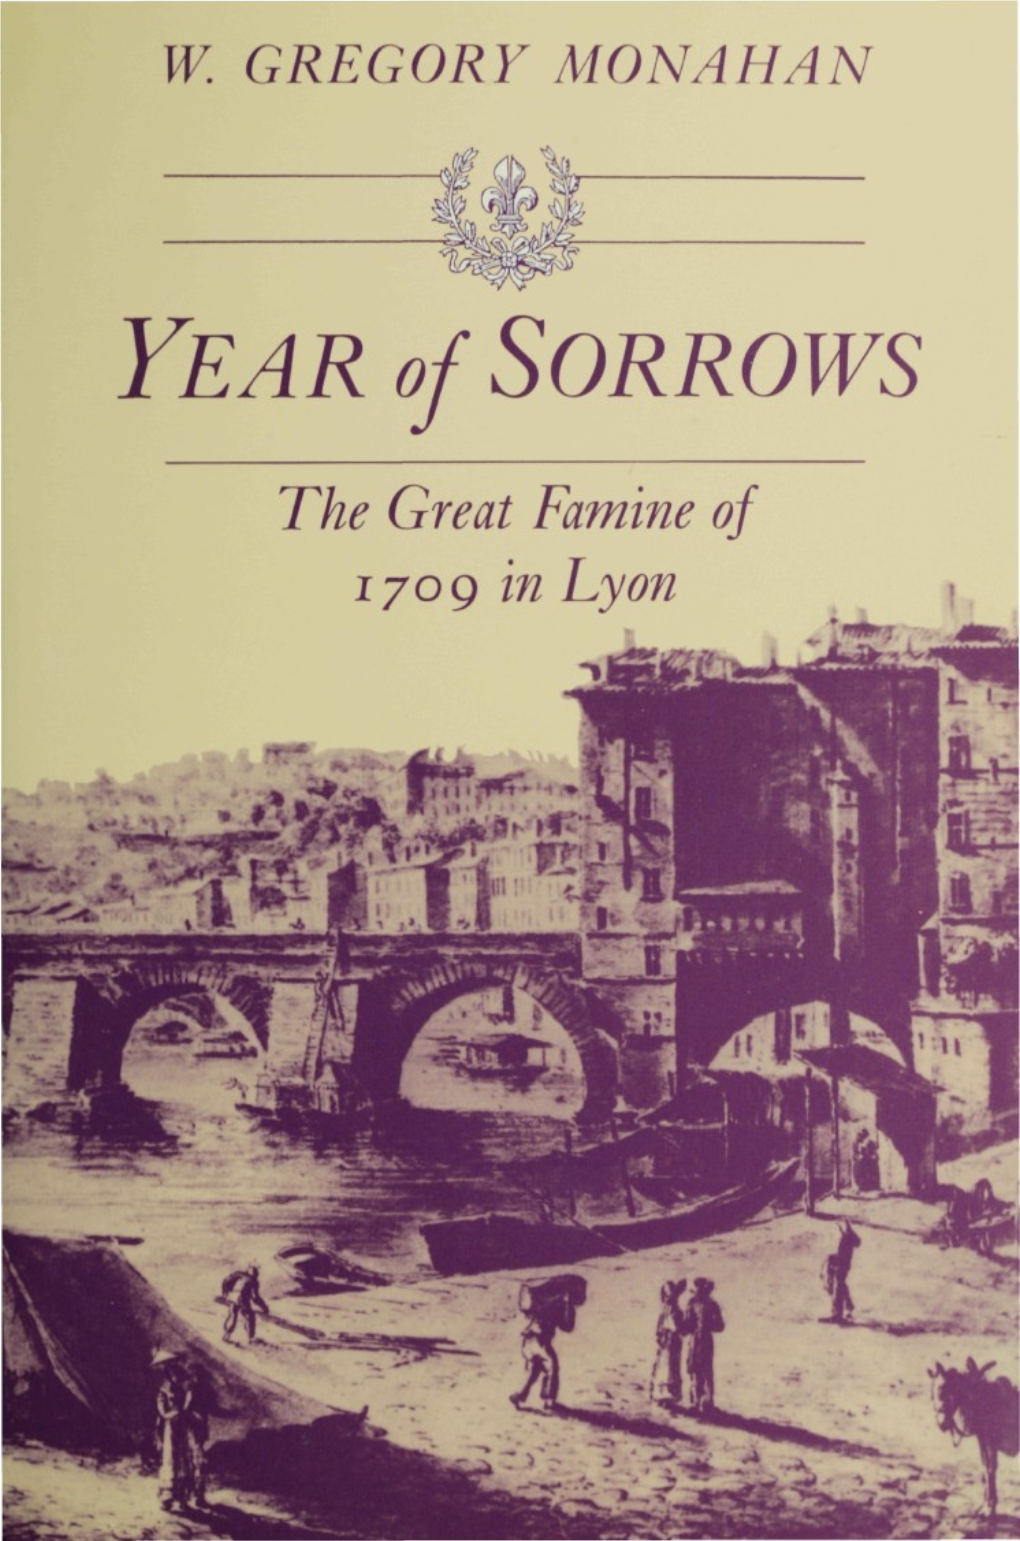 YEAR of SORROWS